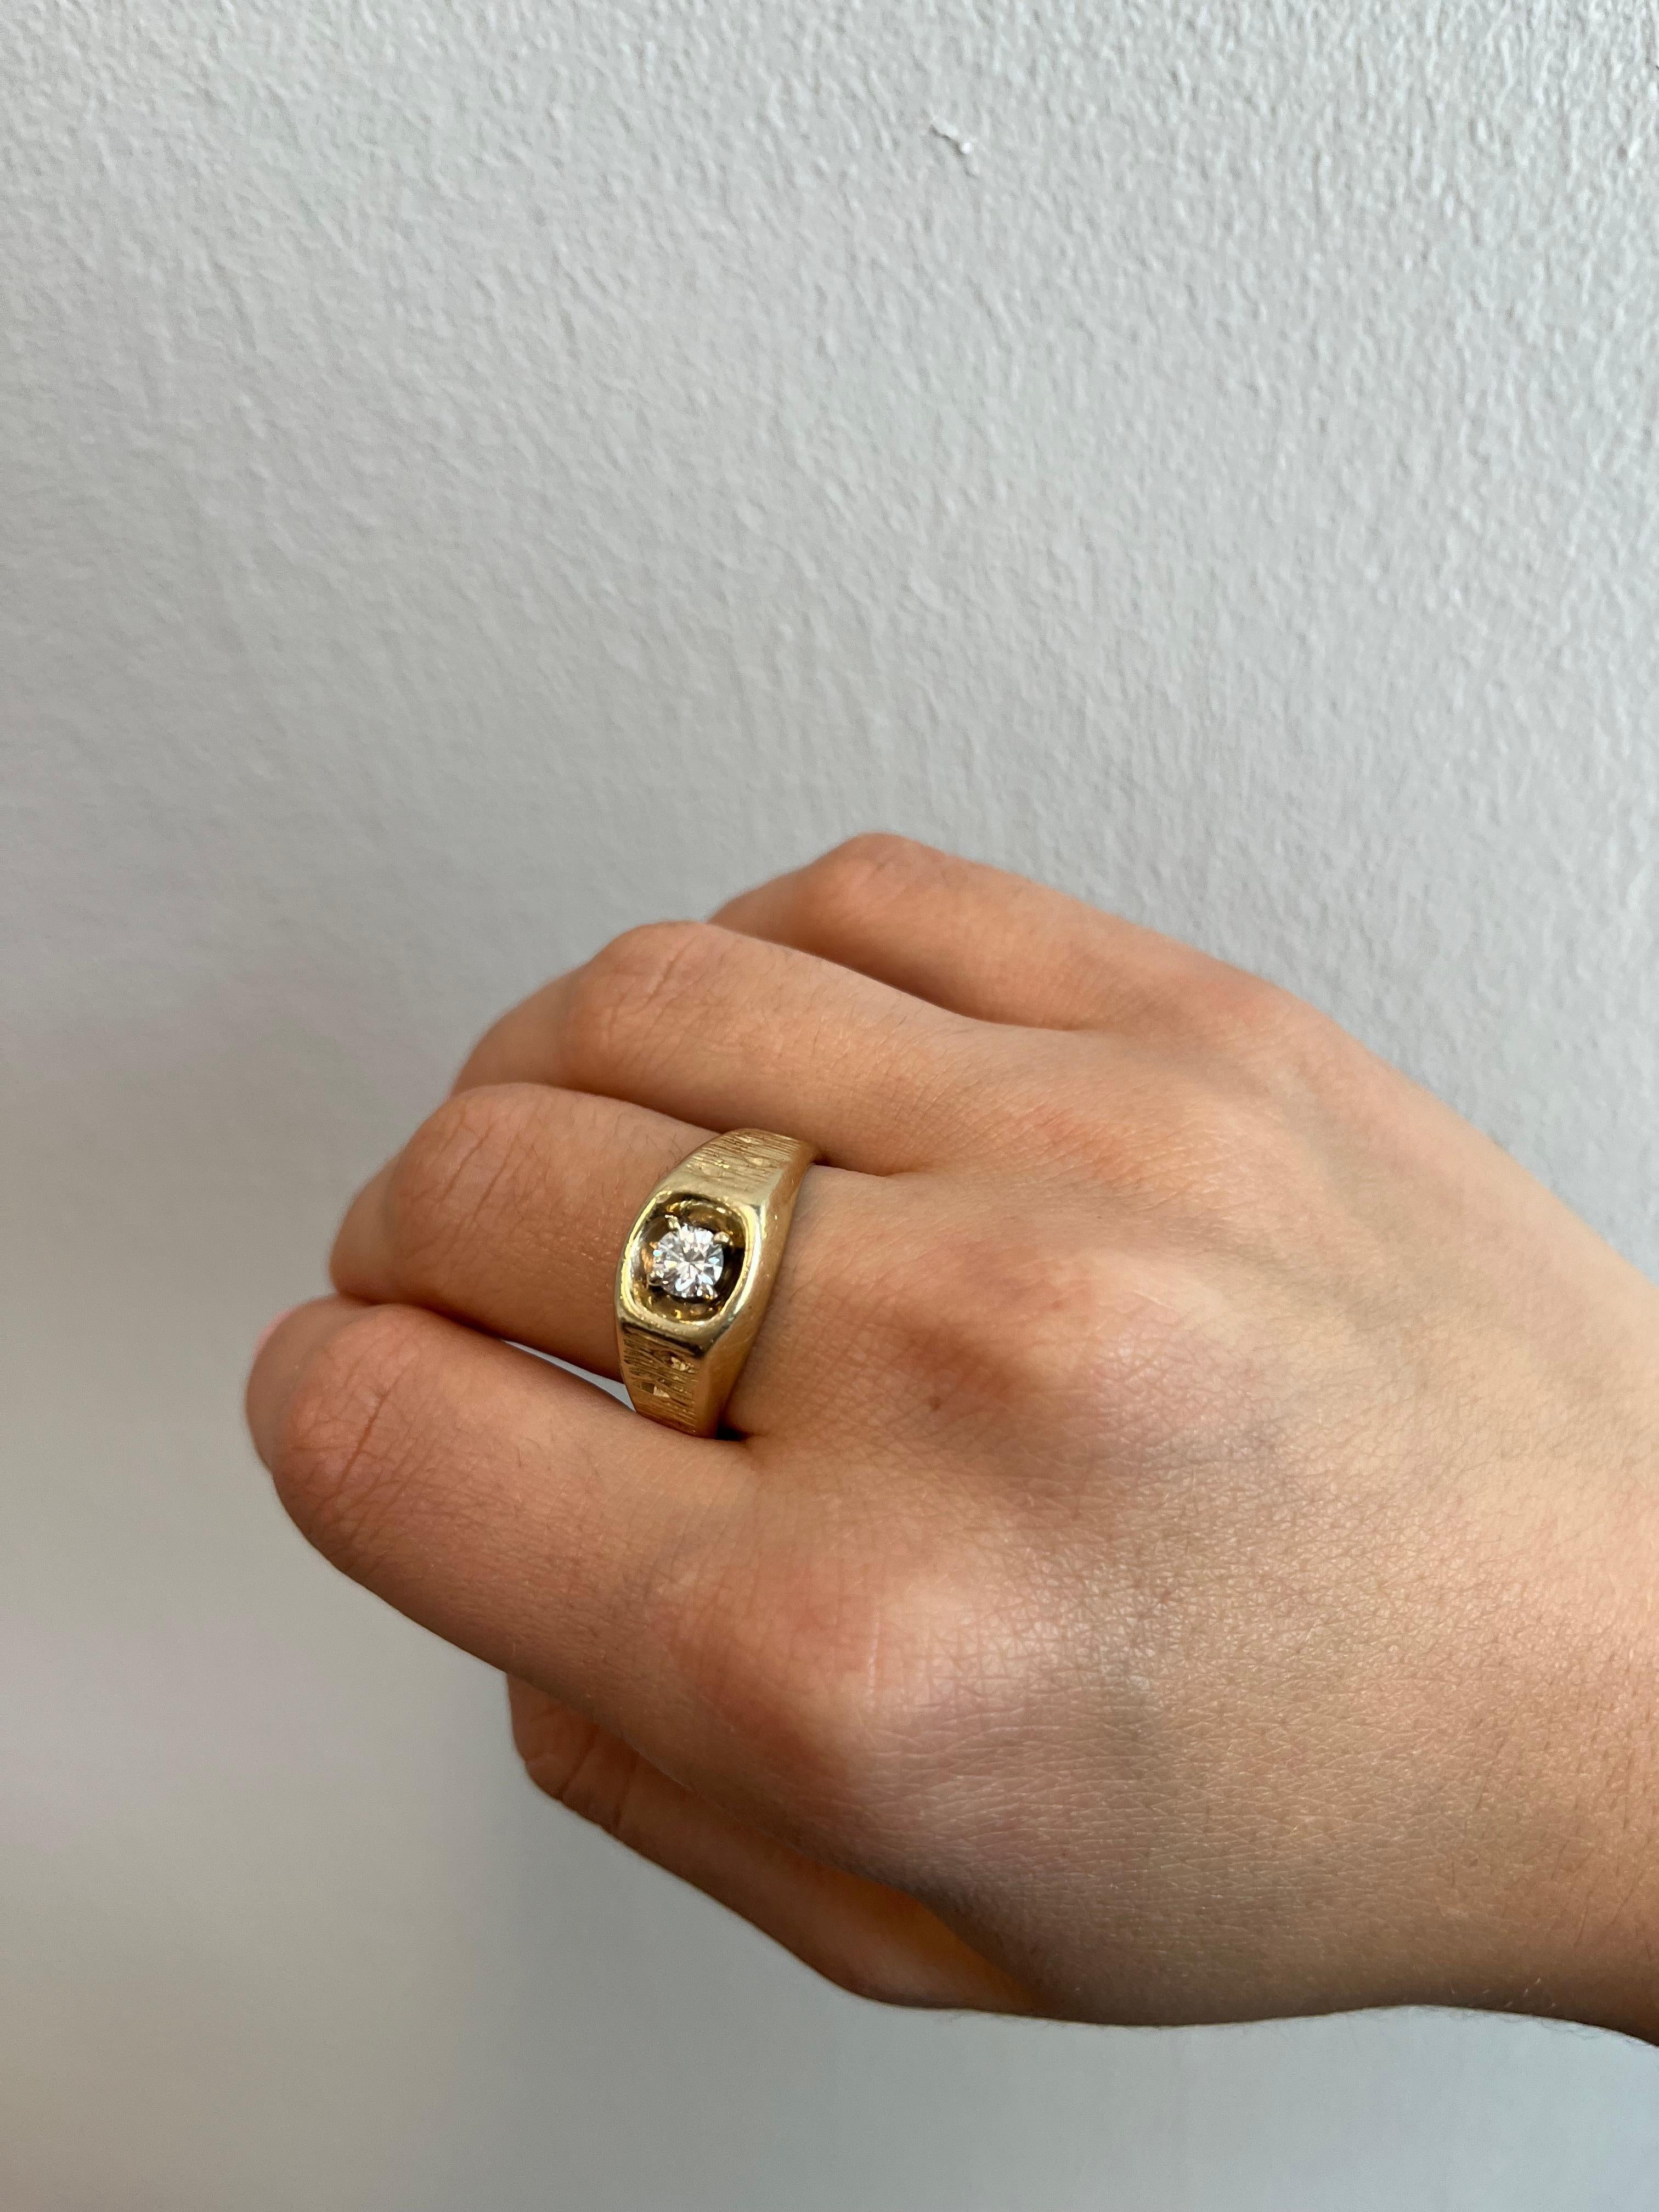 Vintage Artisan Men's Gold Diamond Ring: .45 Carat Diamond, Sizable 10.5 For Sale 1